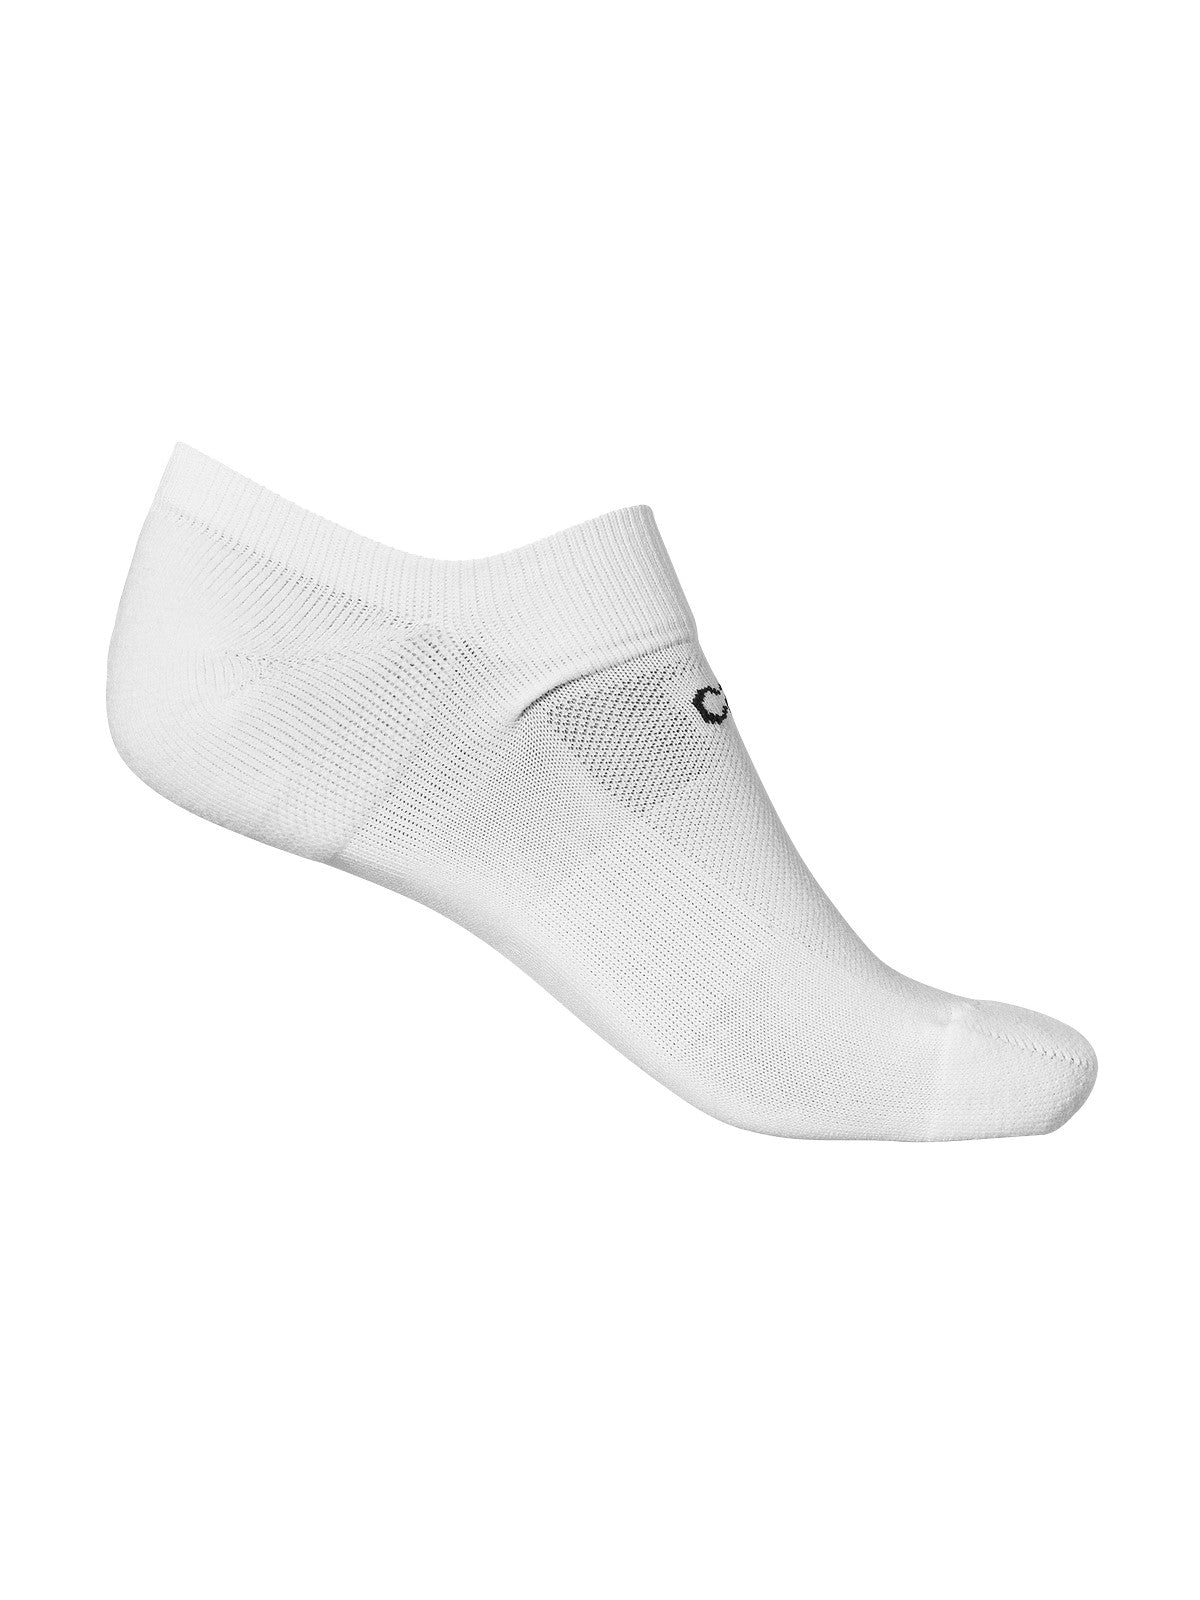 Skarpety CASALL Traning Sock biały